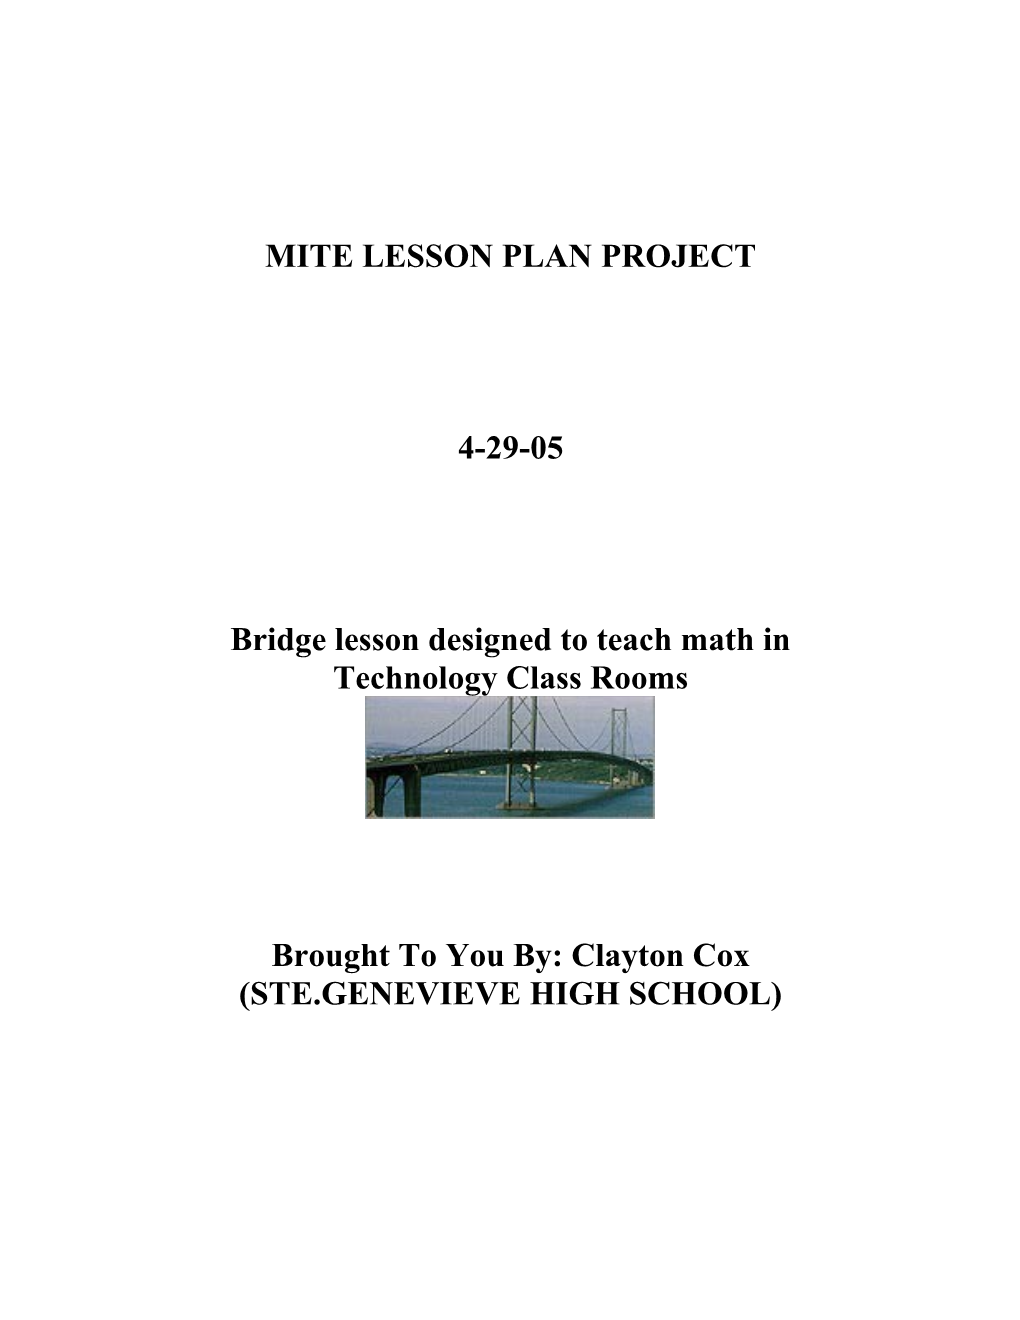 Bridge Lesson Designed to Teach Math in Technology